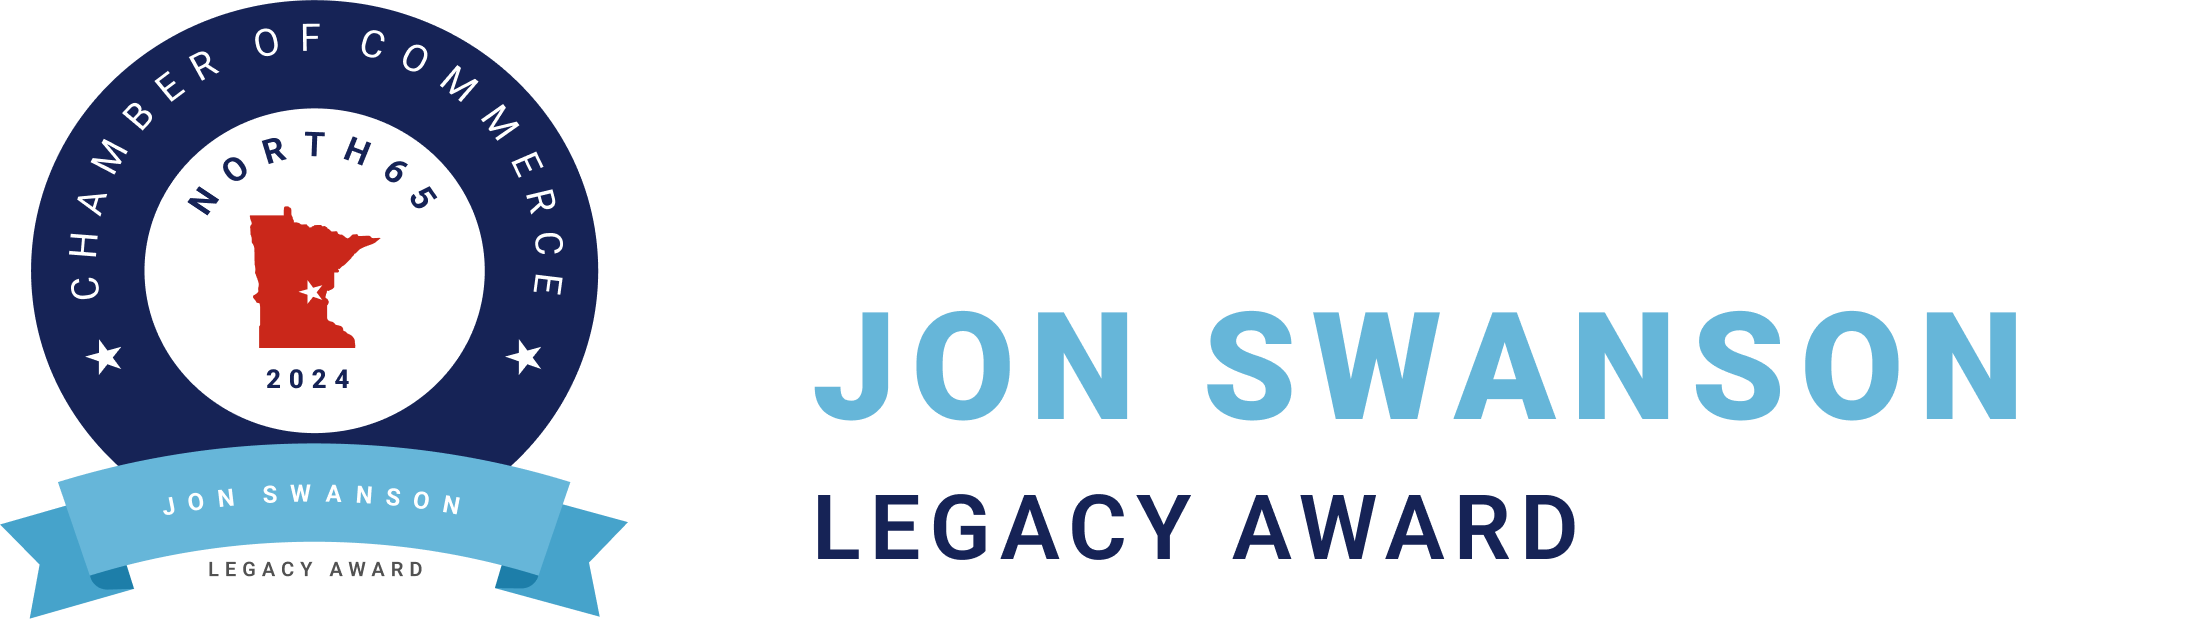 Jon Swanson Legacy Award Image 2024